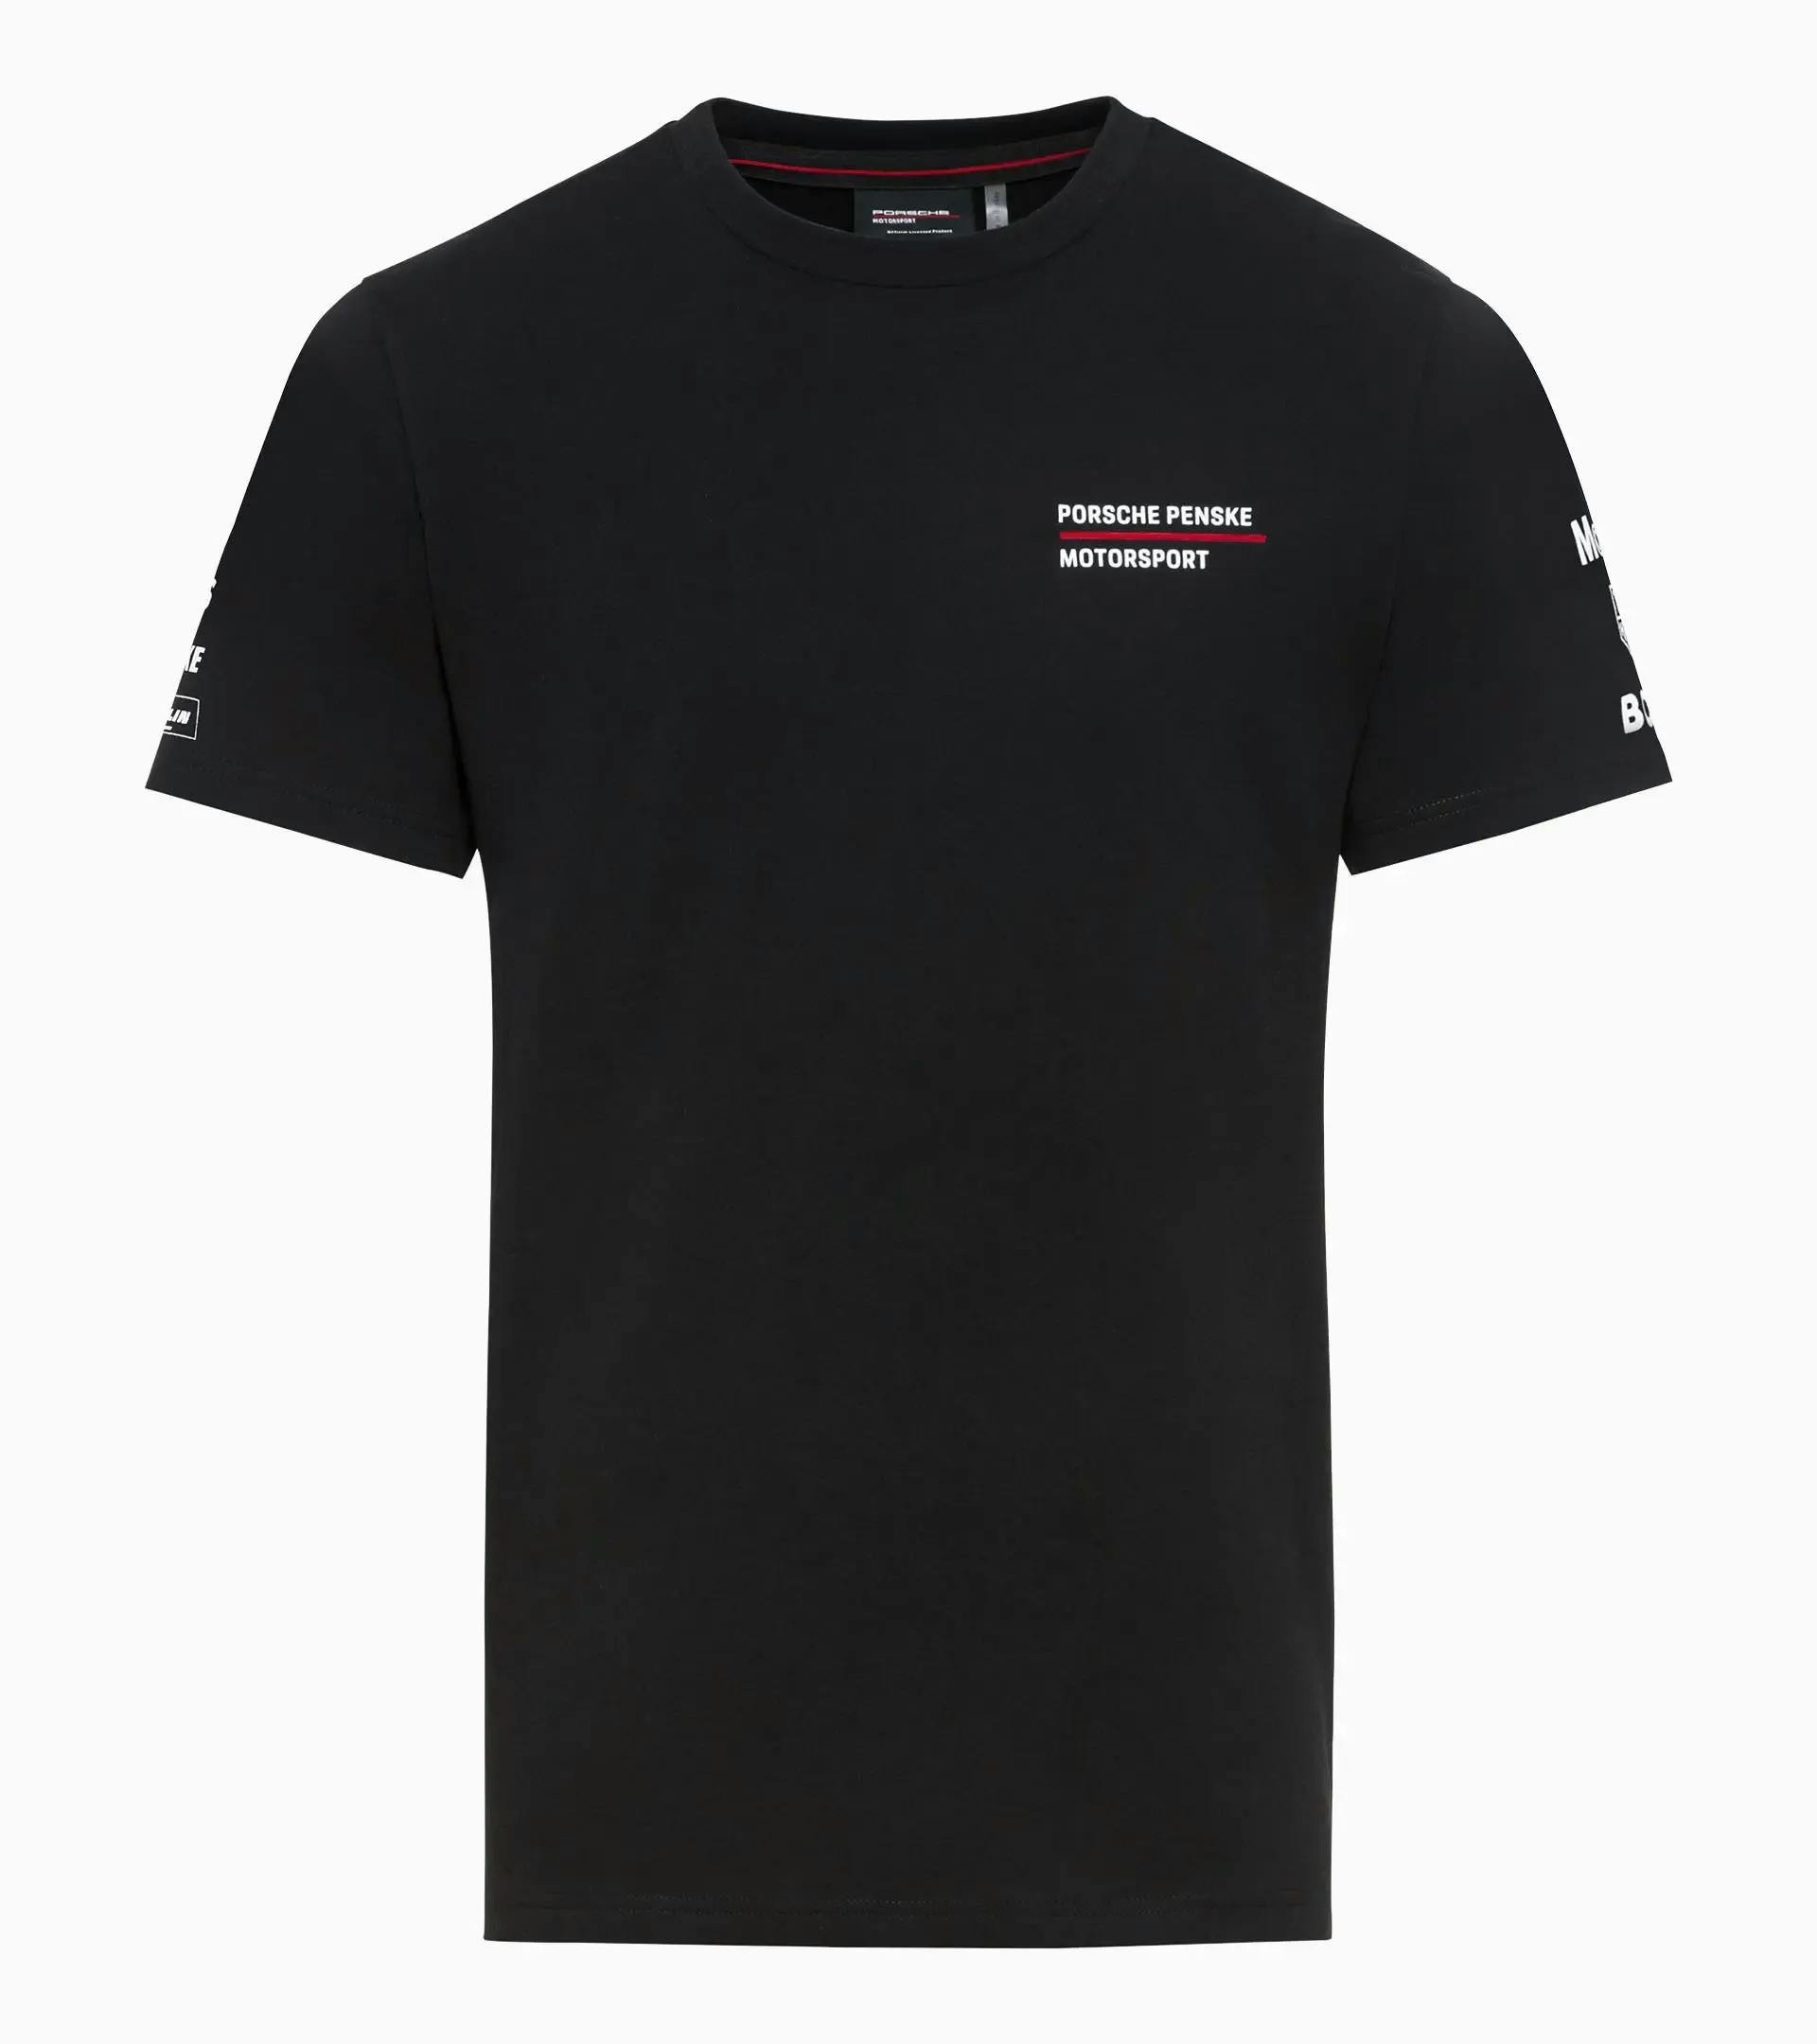 T-shirt unisex – Porsche Penske Motorsport 1